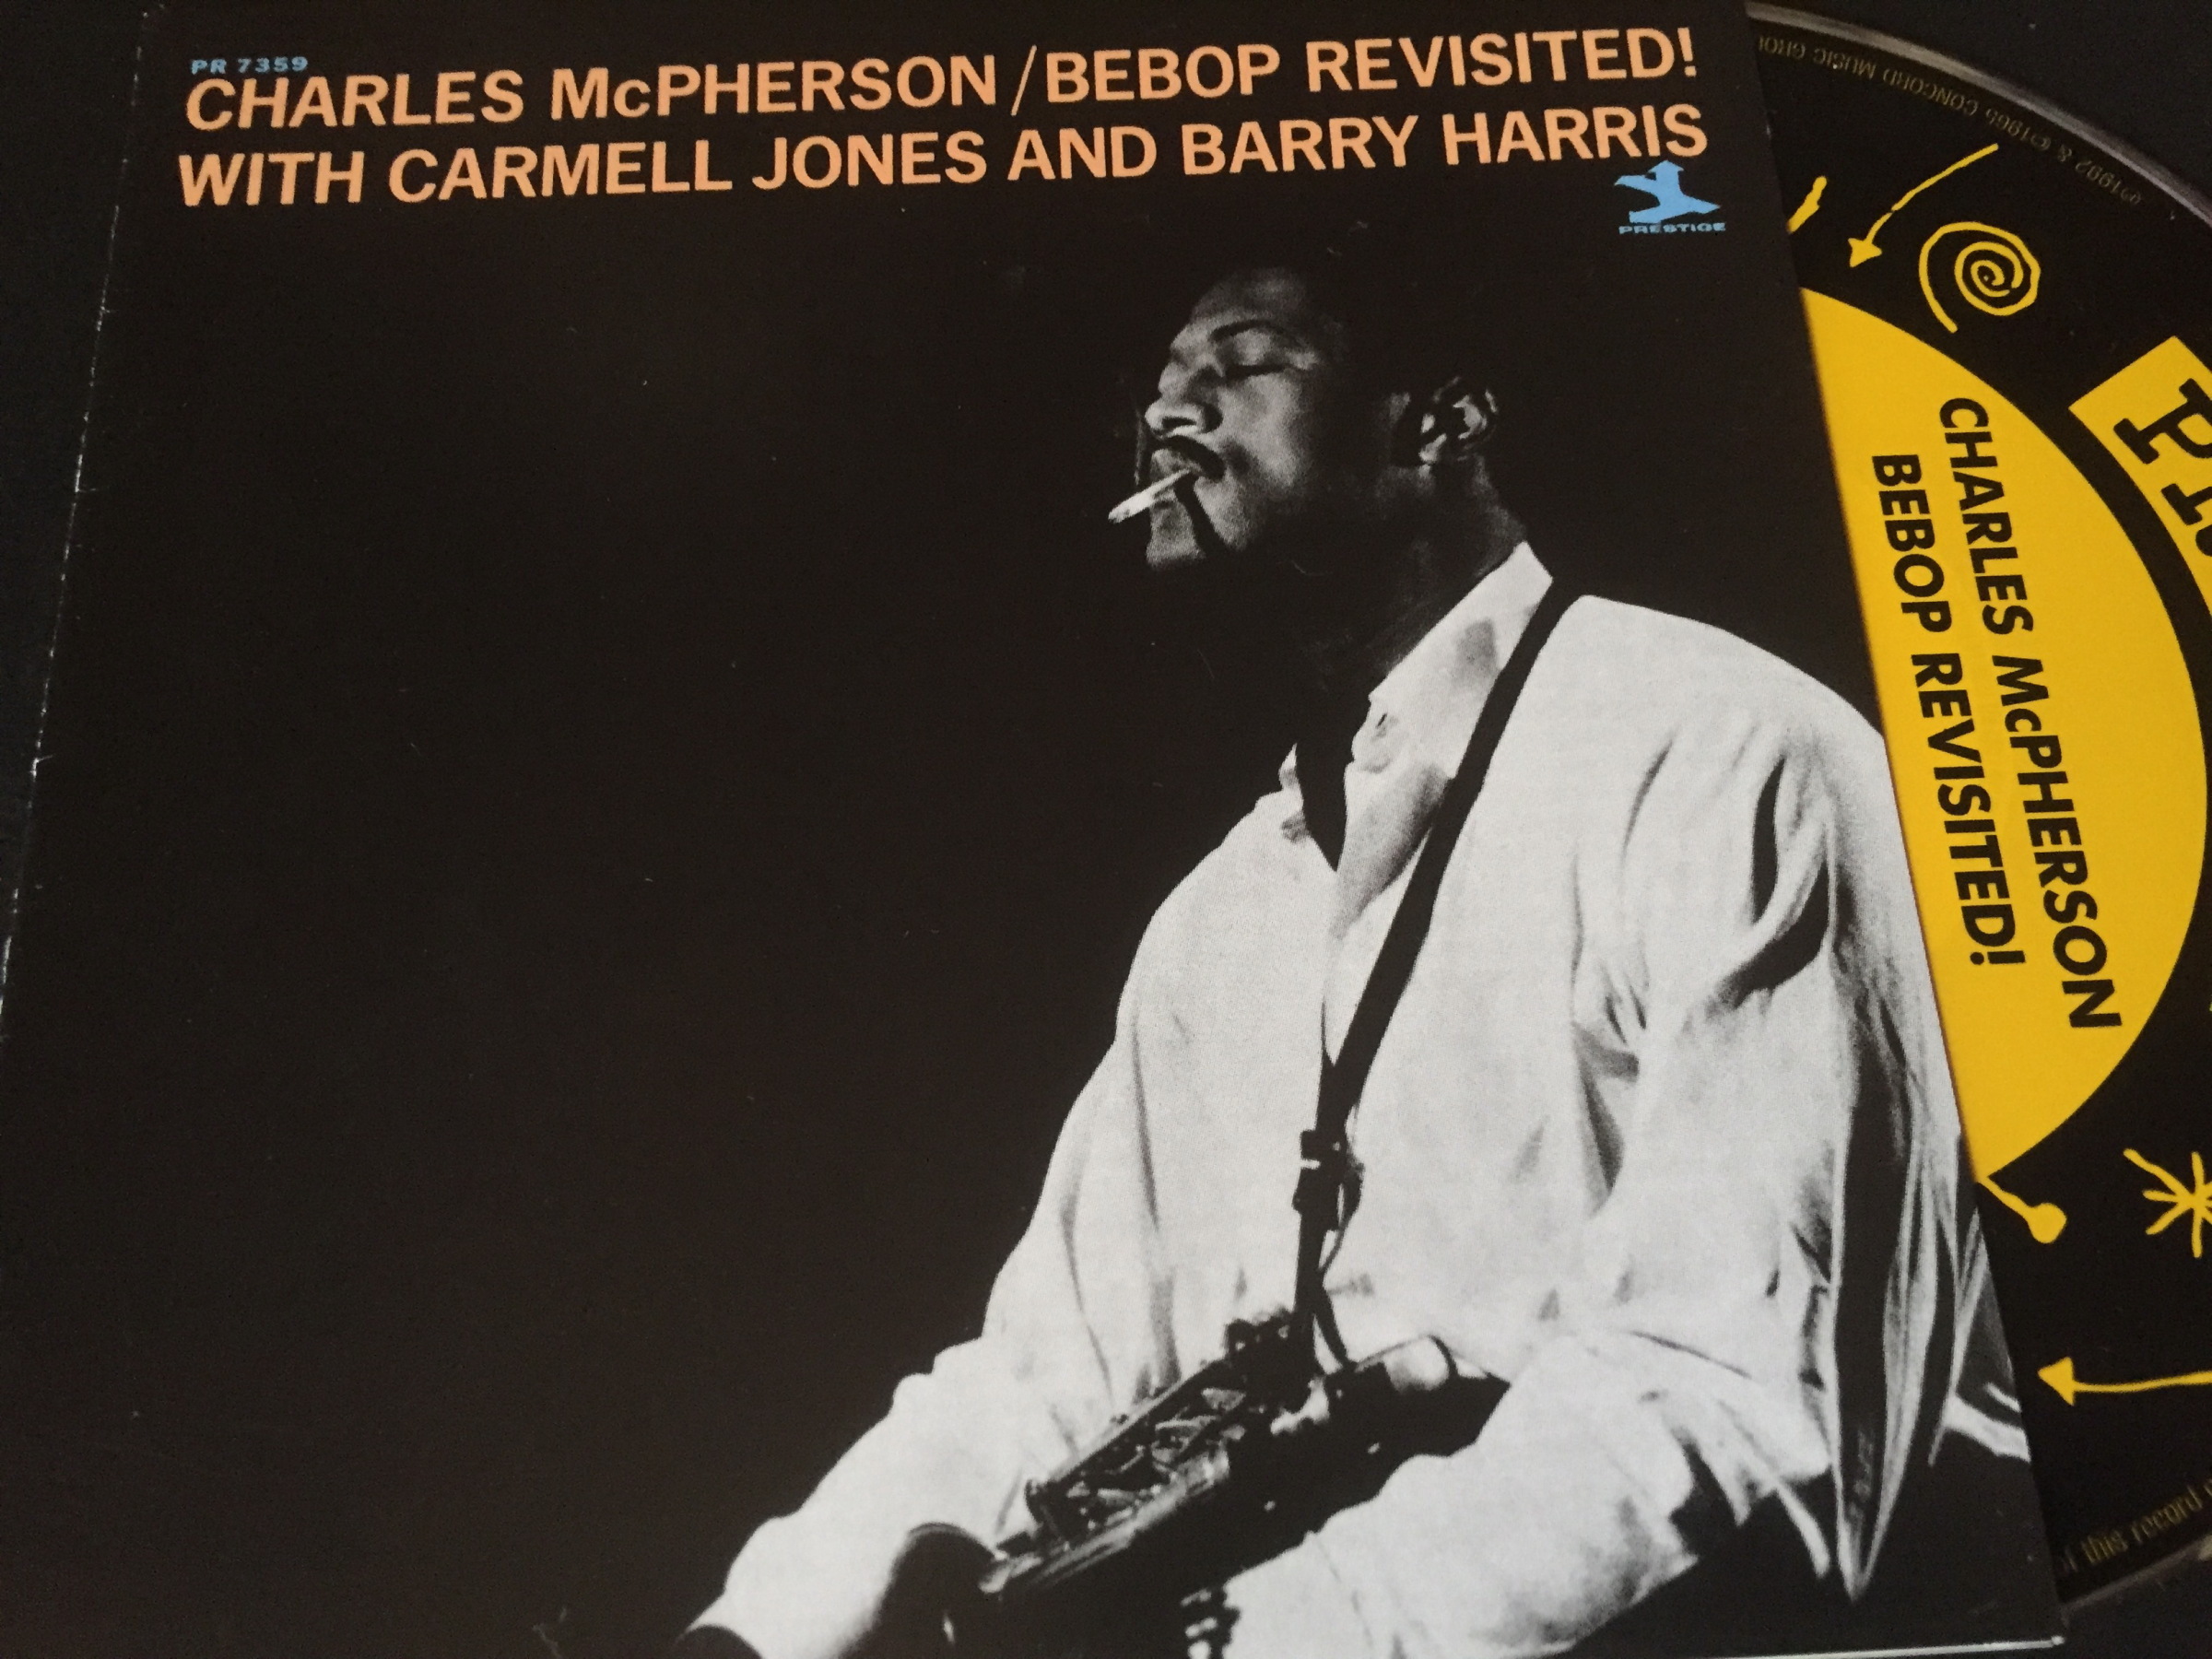 Charles McPherson / Bebop Revisited!: 日々JAZZ的な生活